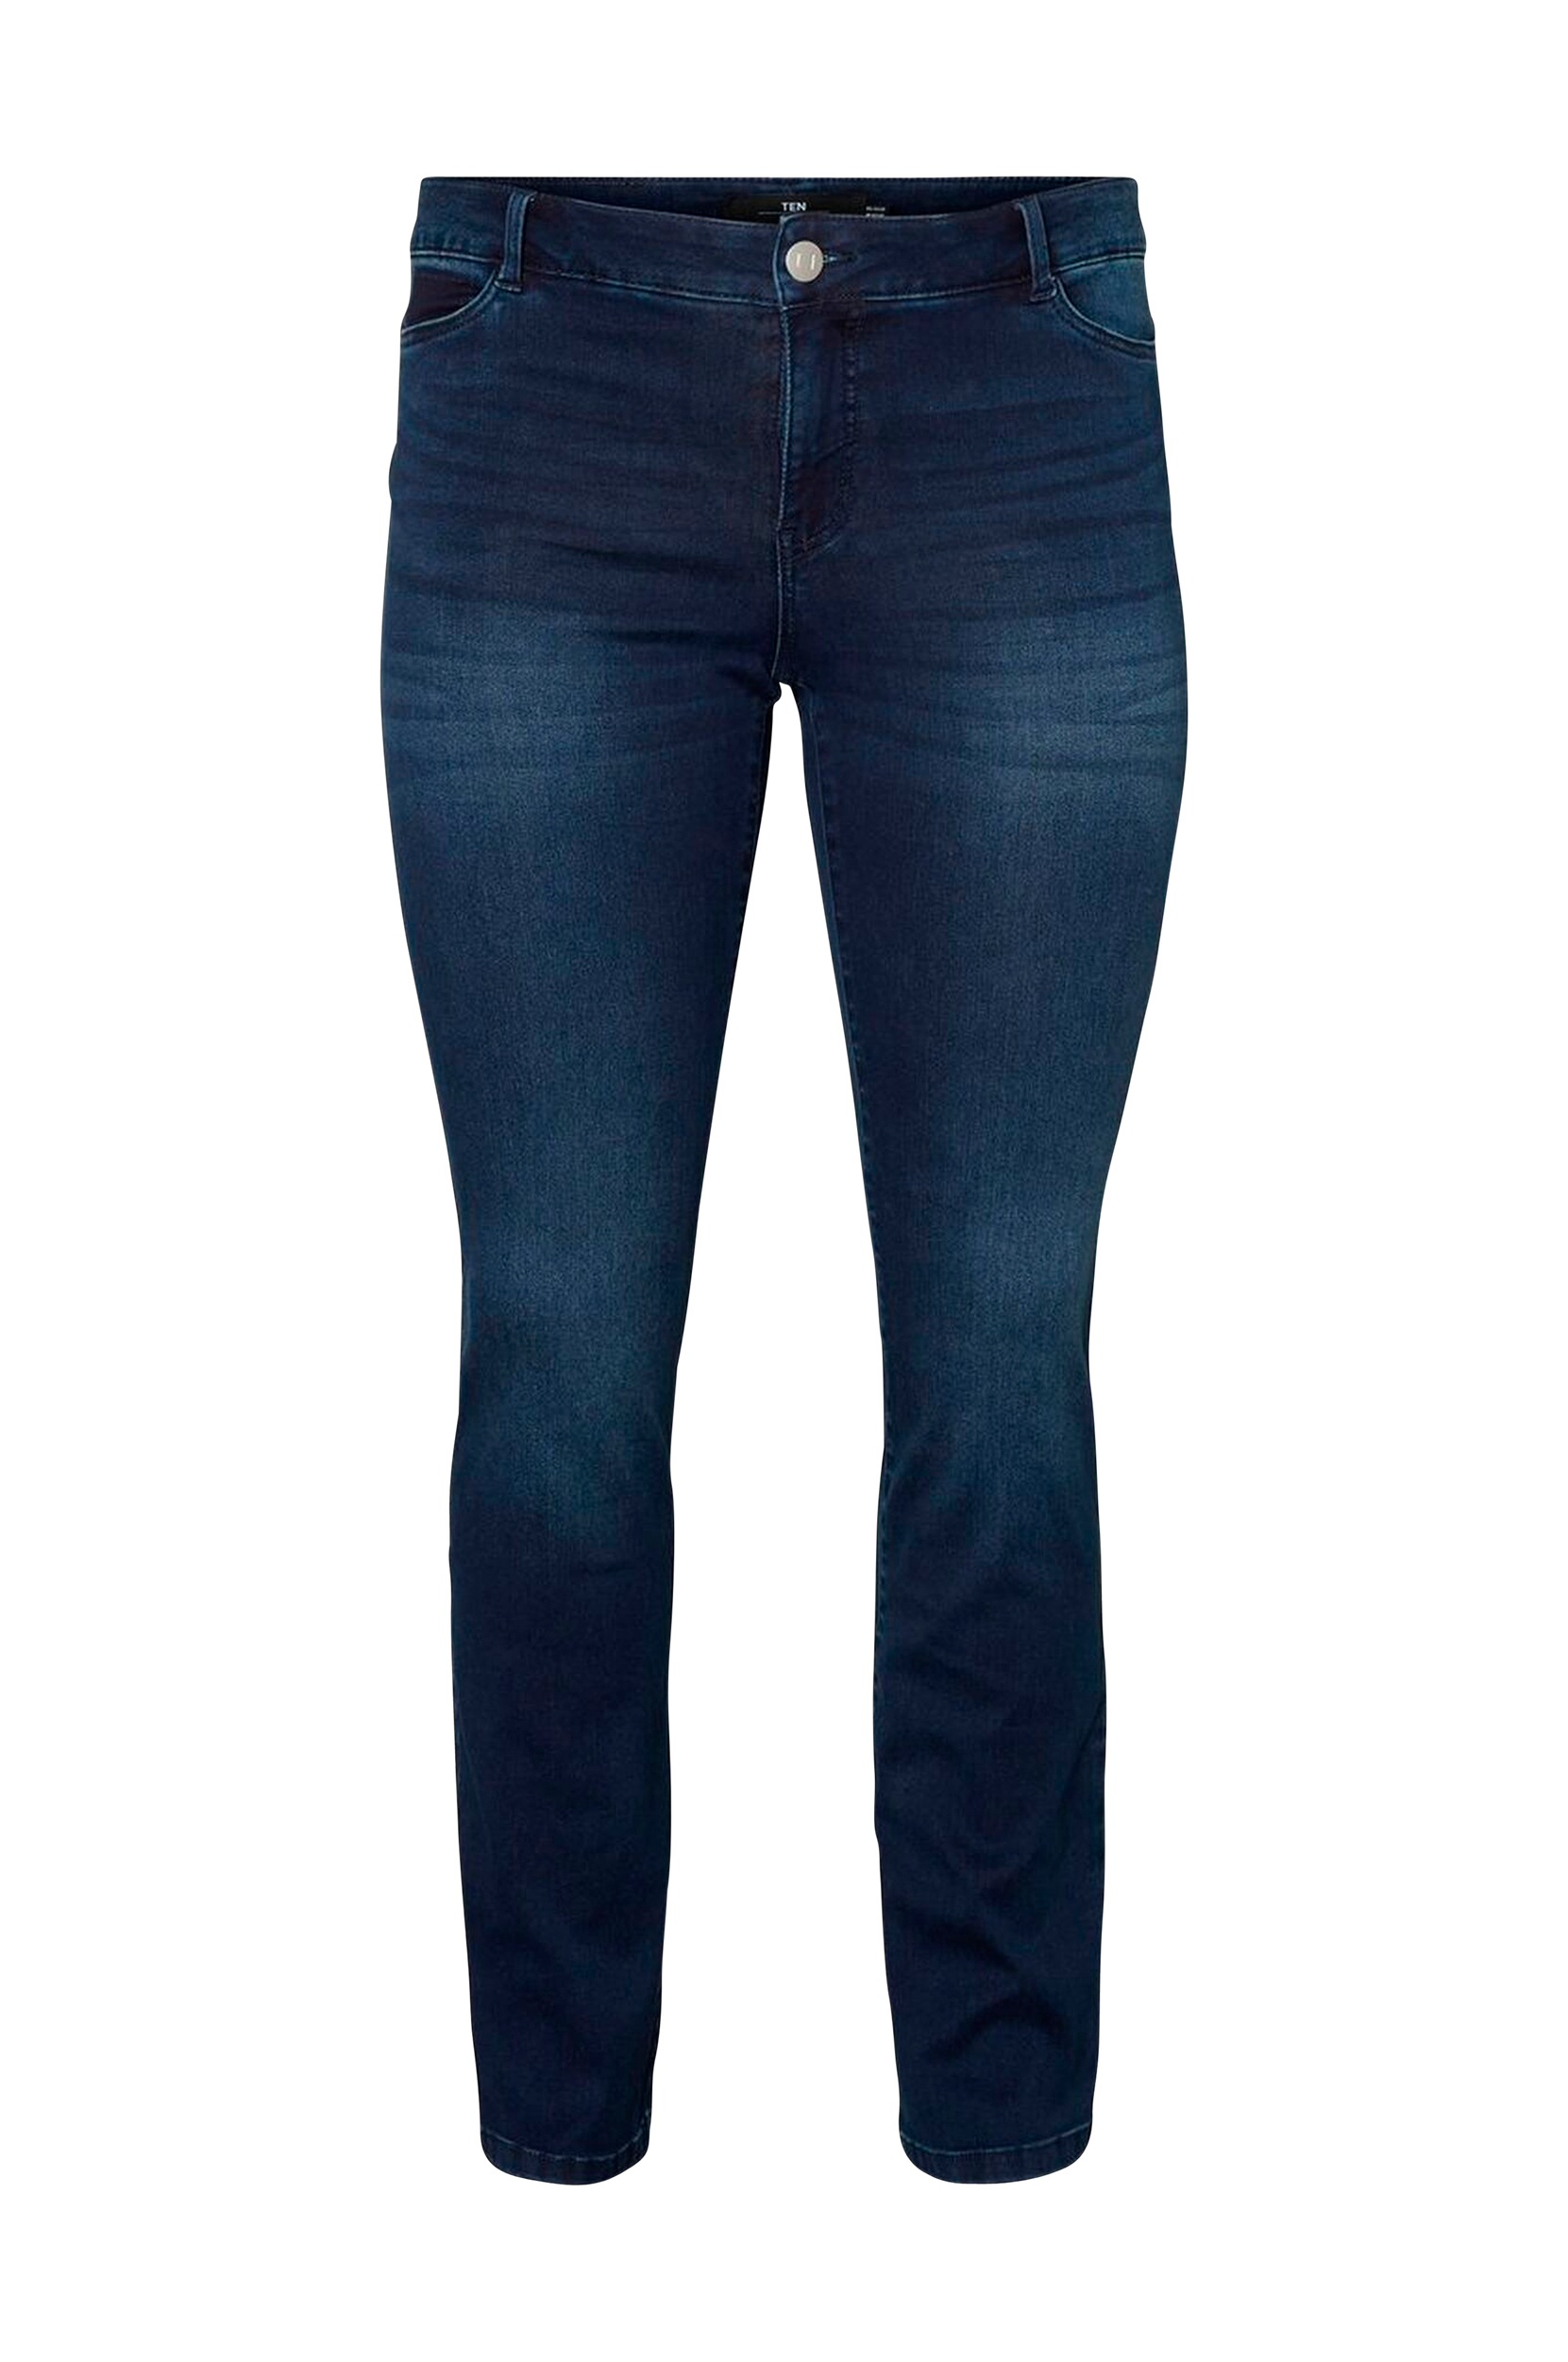 Farkut jrTennikita ST DB Jeans, JUNAROSE by VERO MODA